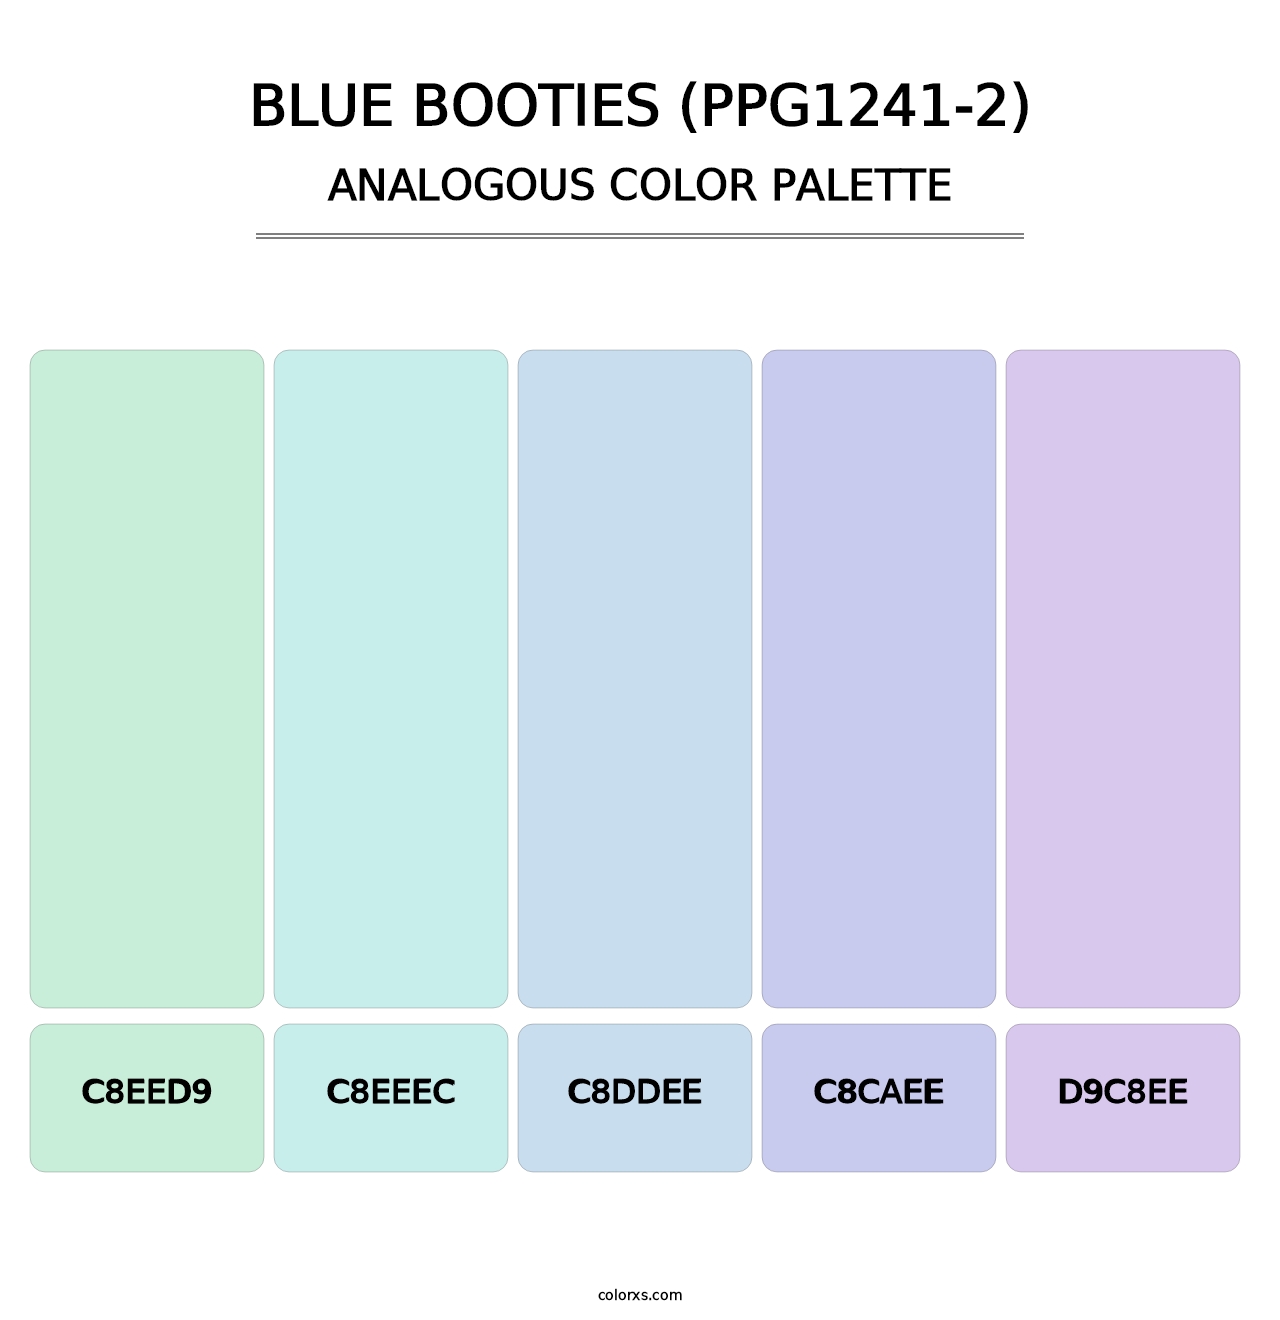 Blue Booties (PPG1241-2) - Analogous Color Palette